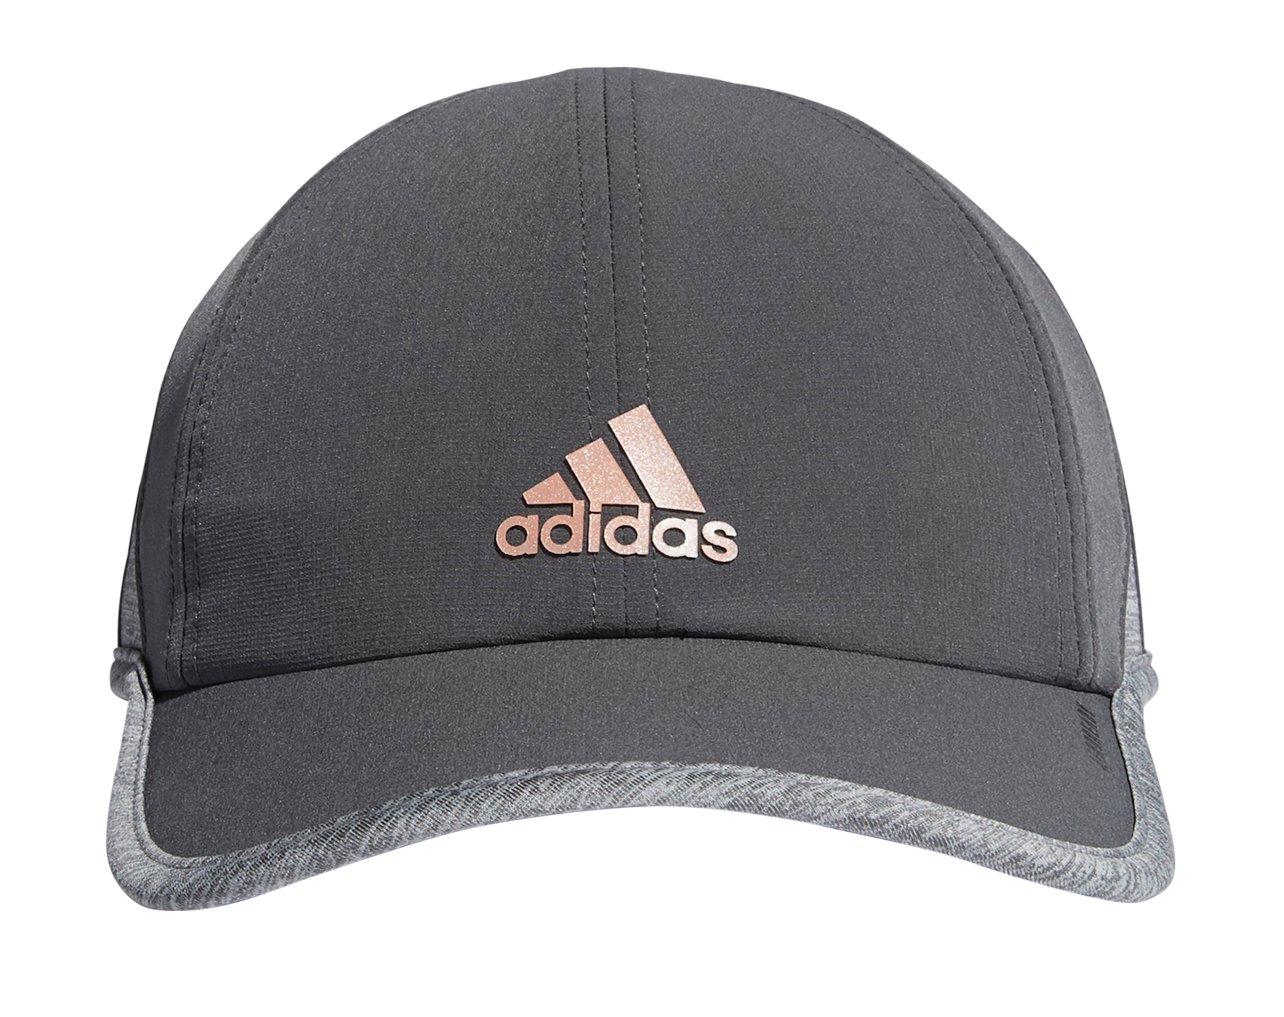 Adidas Women's Superlite Adjustable Cap